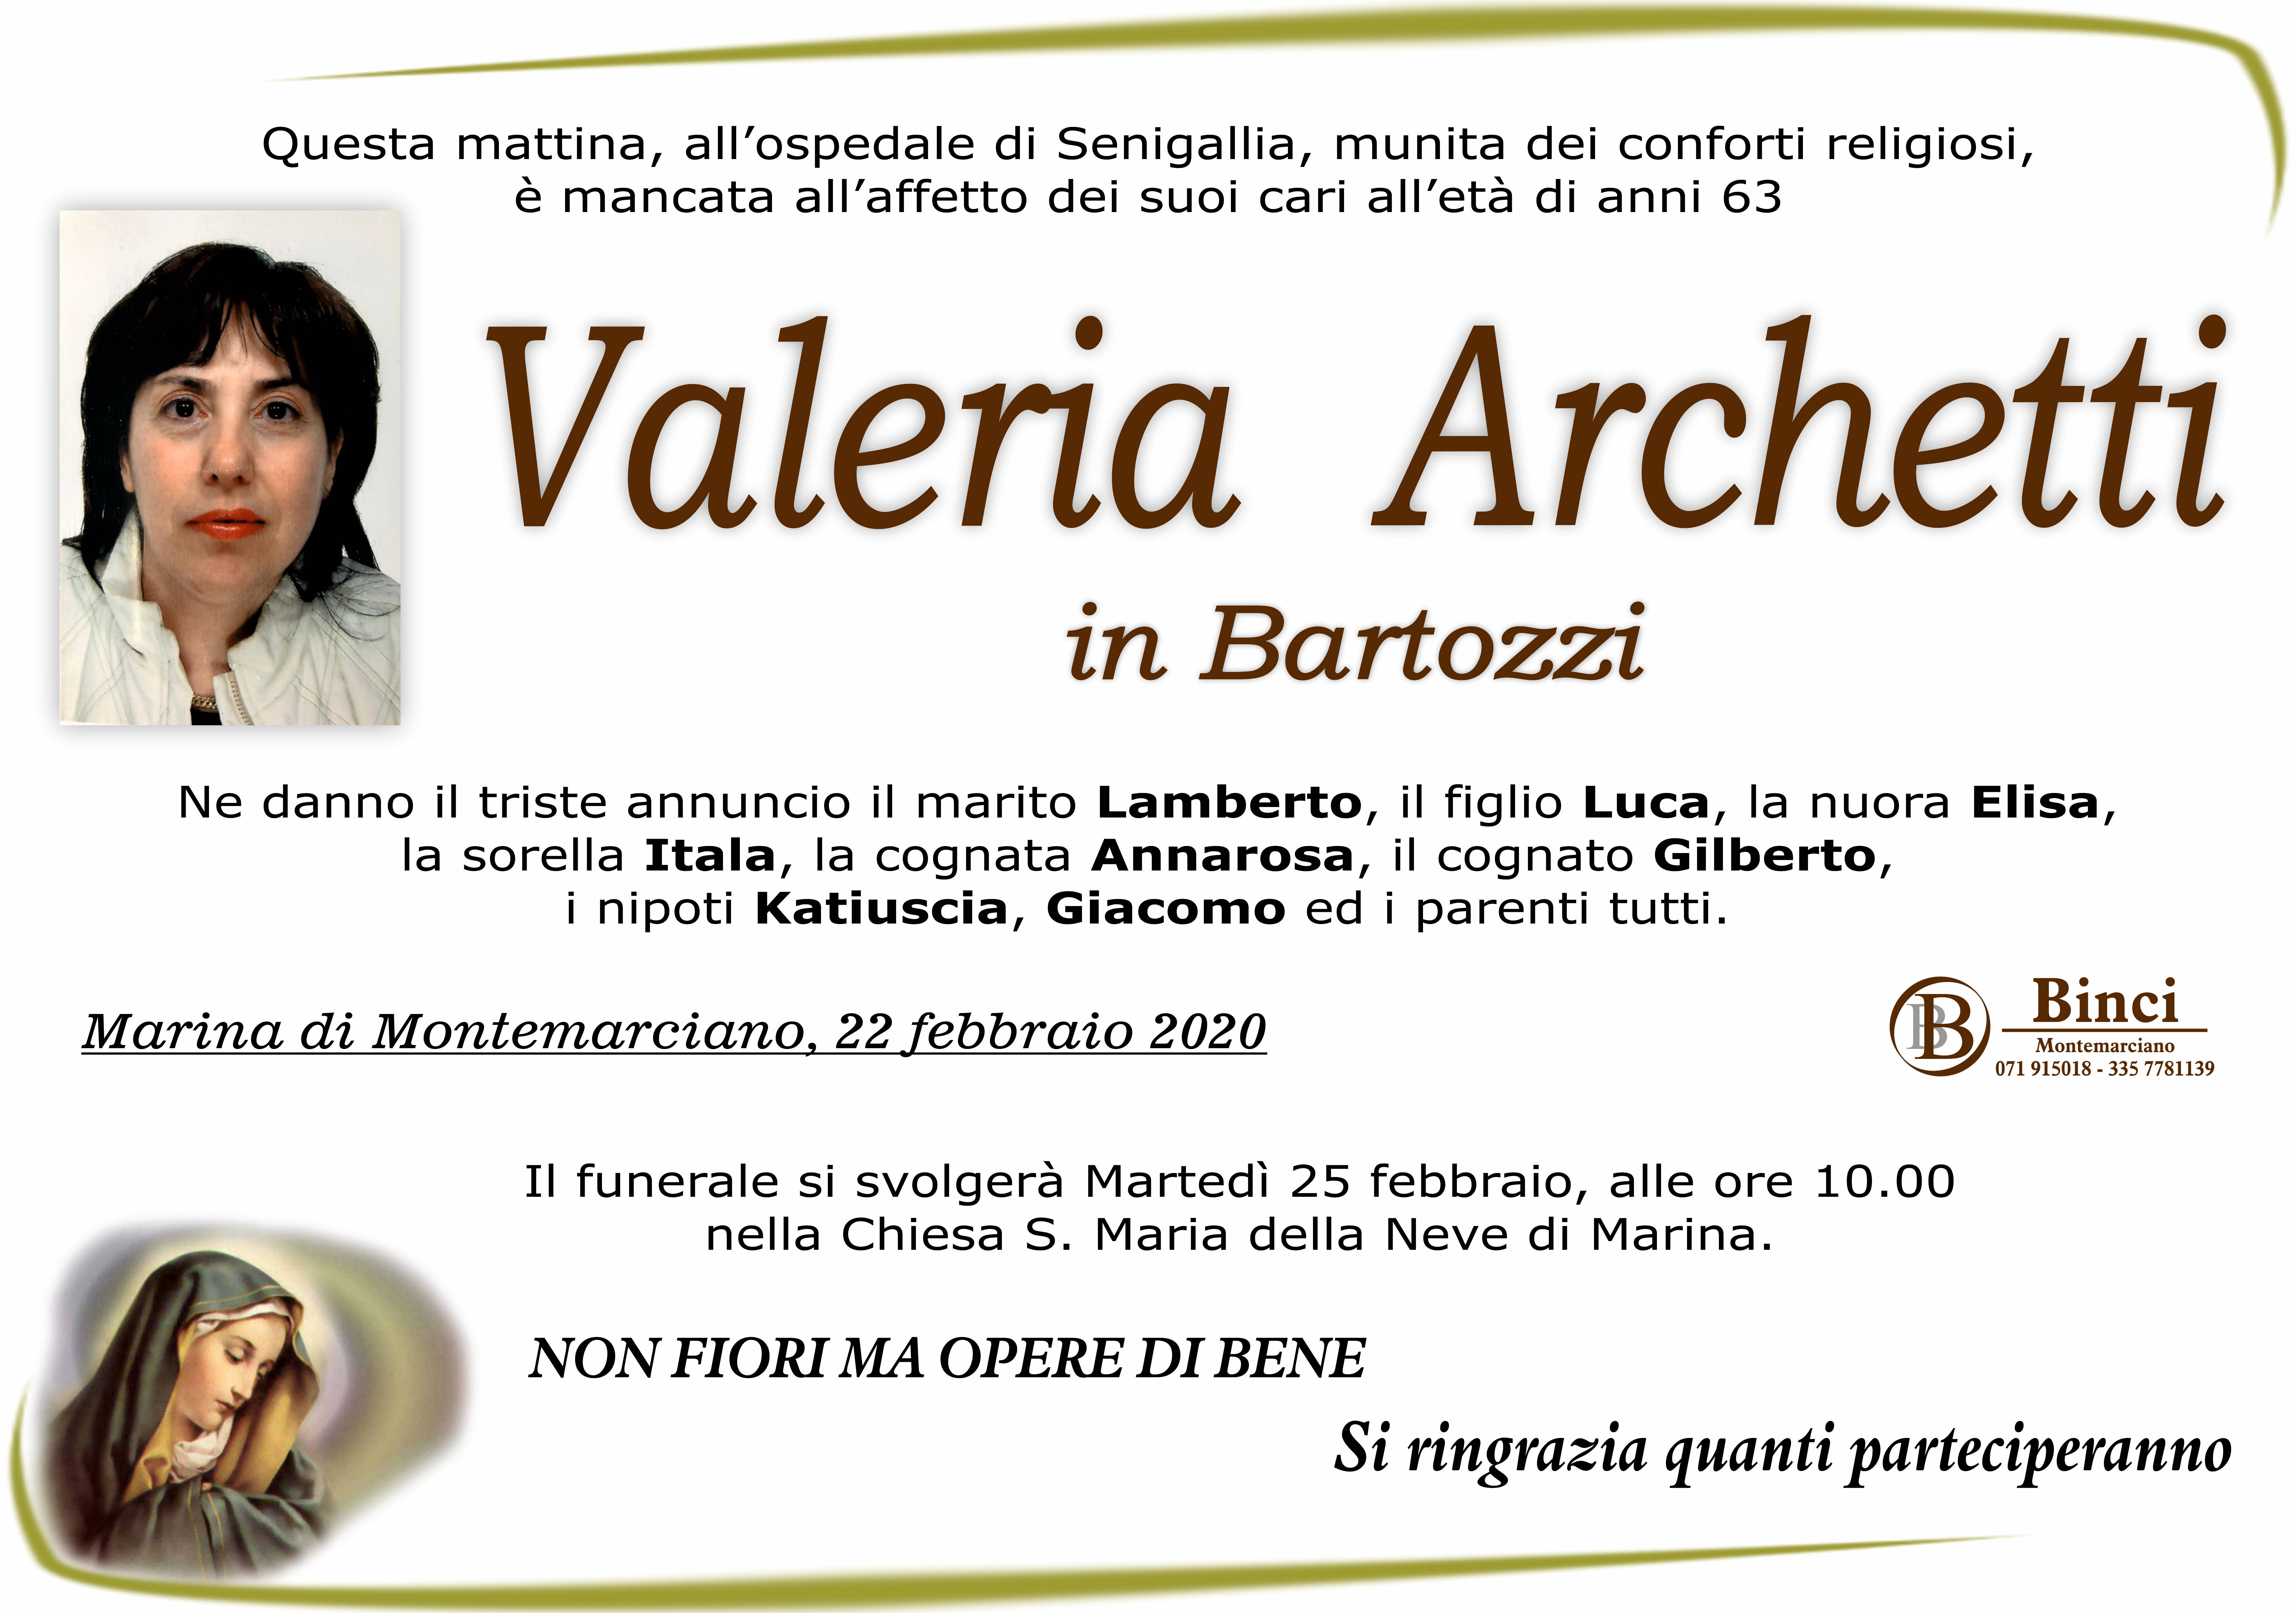 Valeria Archetti